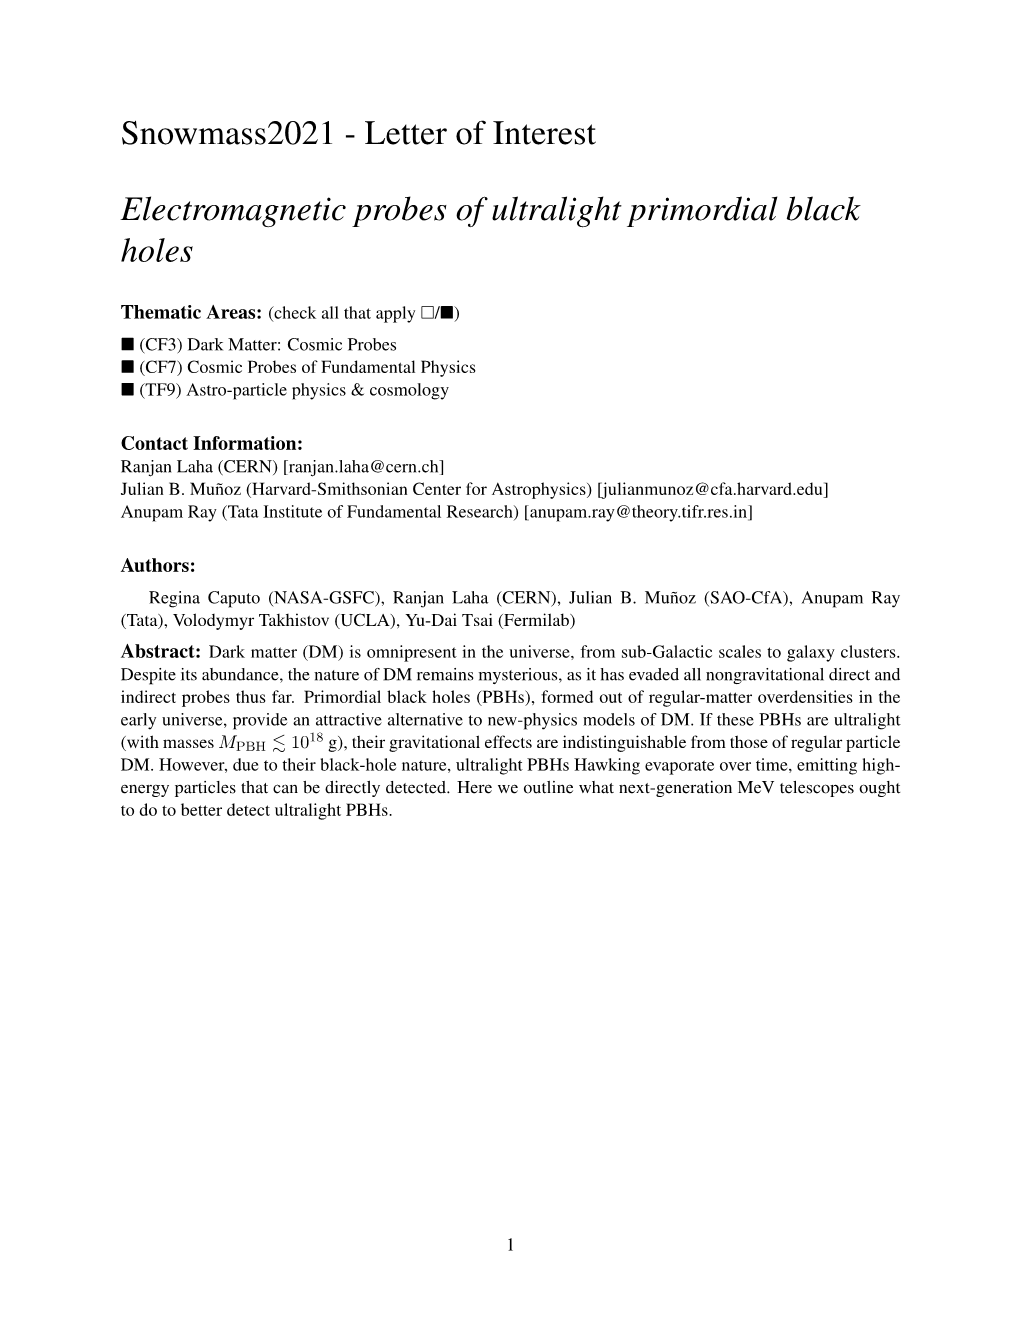 Letter of Interest Electromagnetic Probes of Ultralight Primordial Black